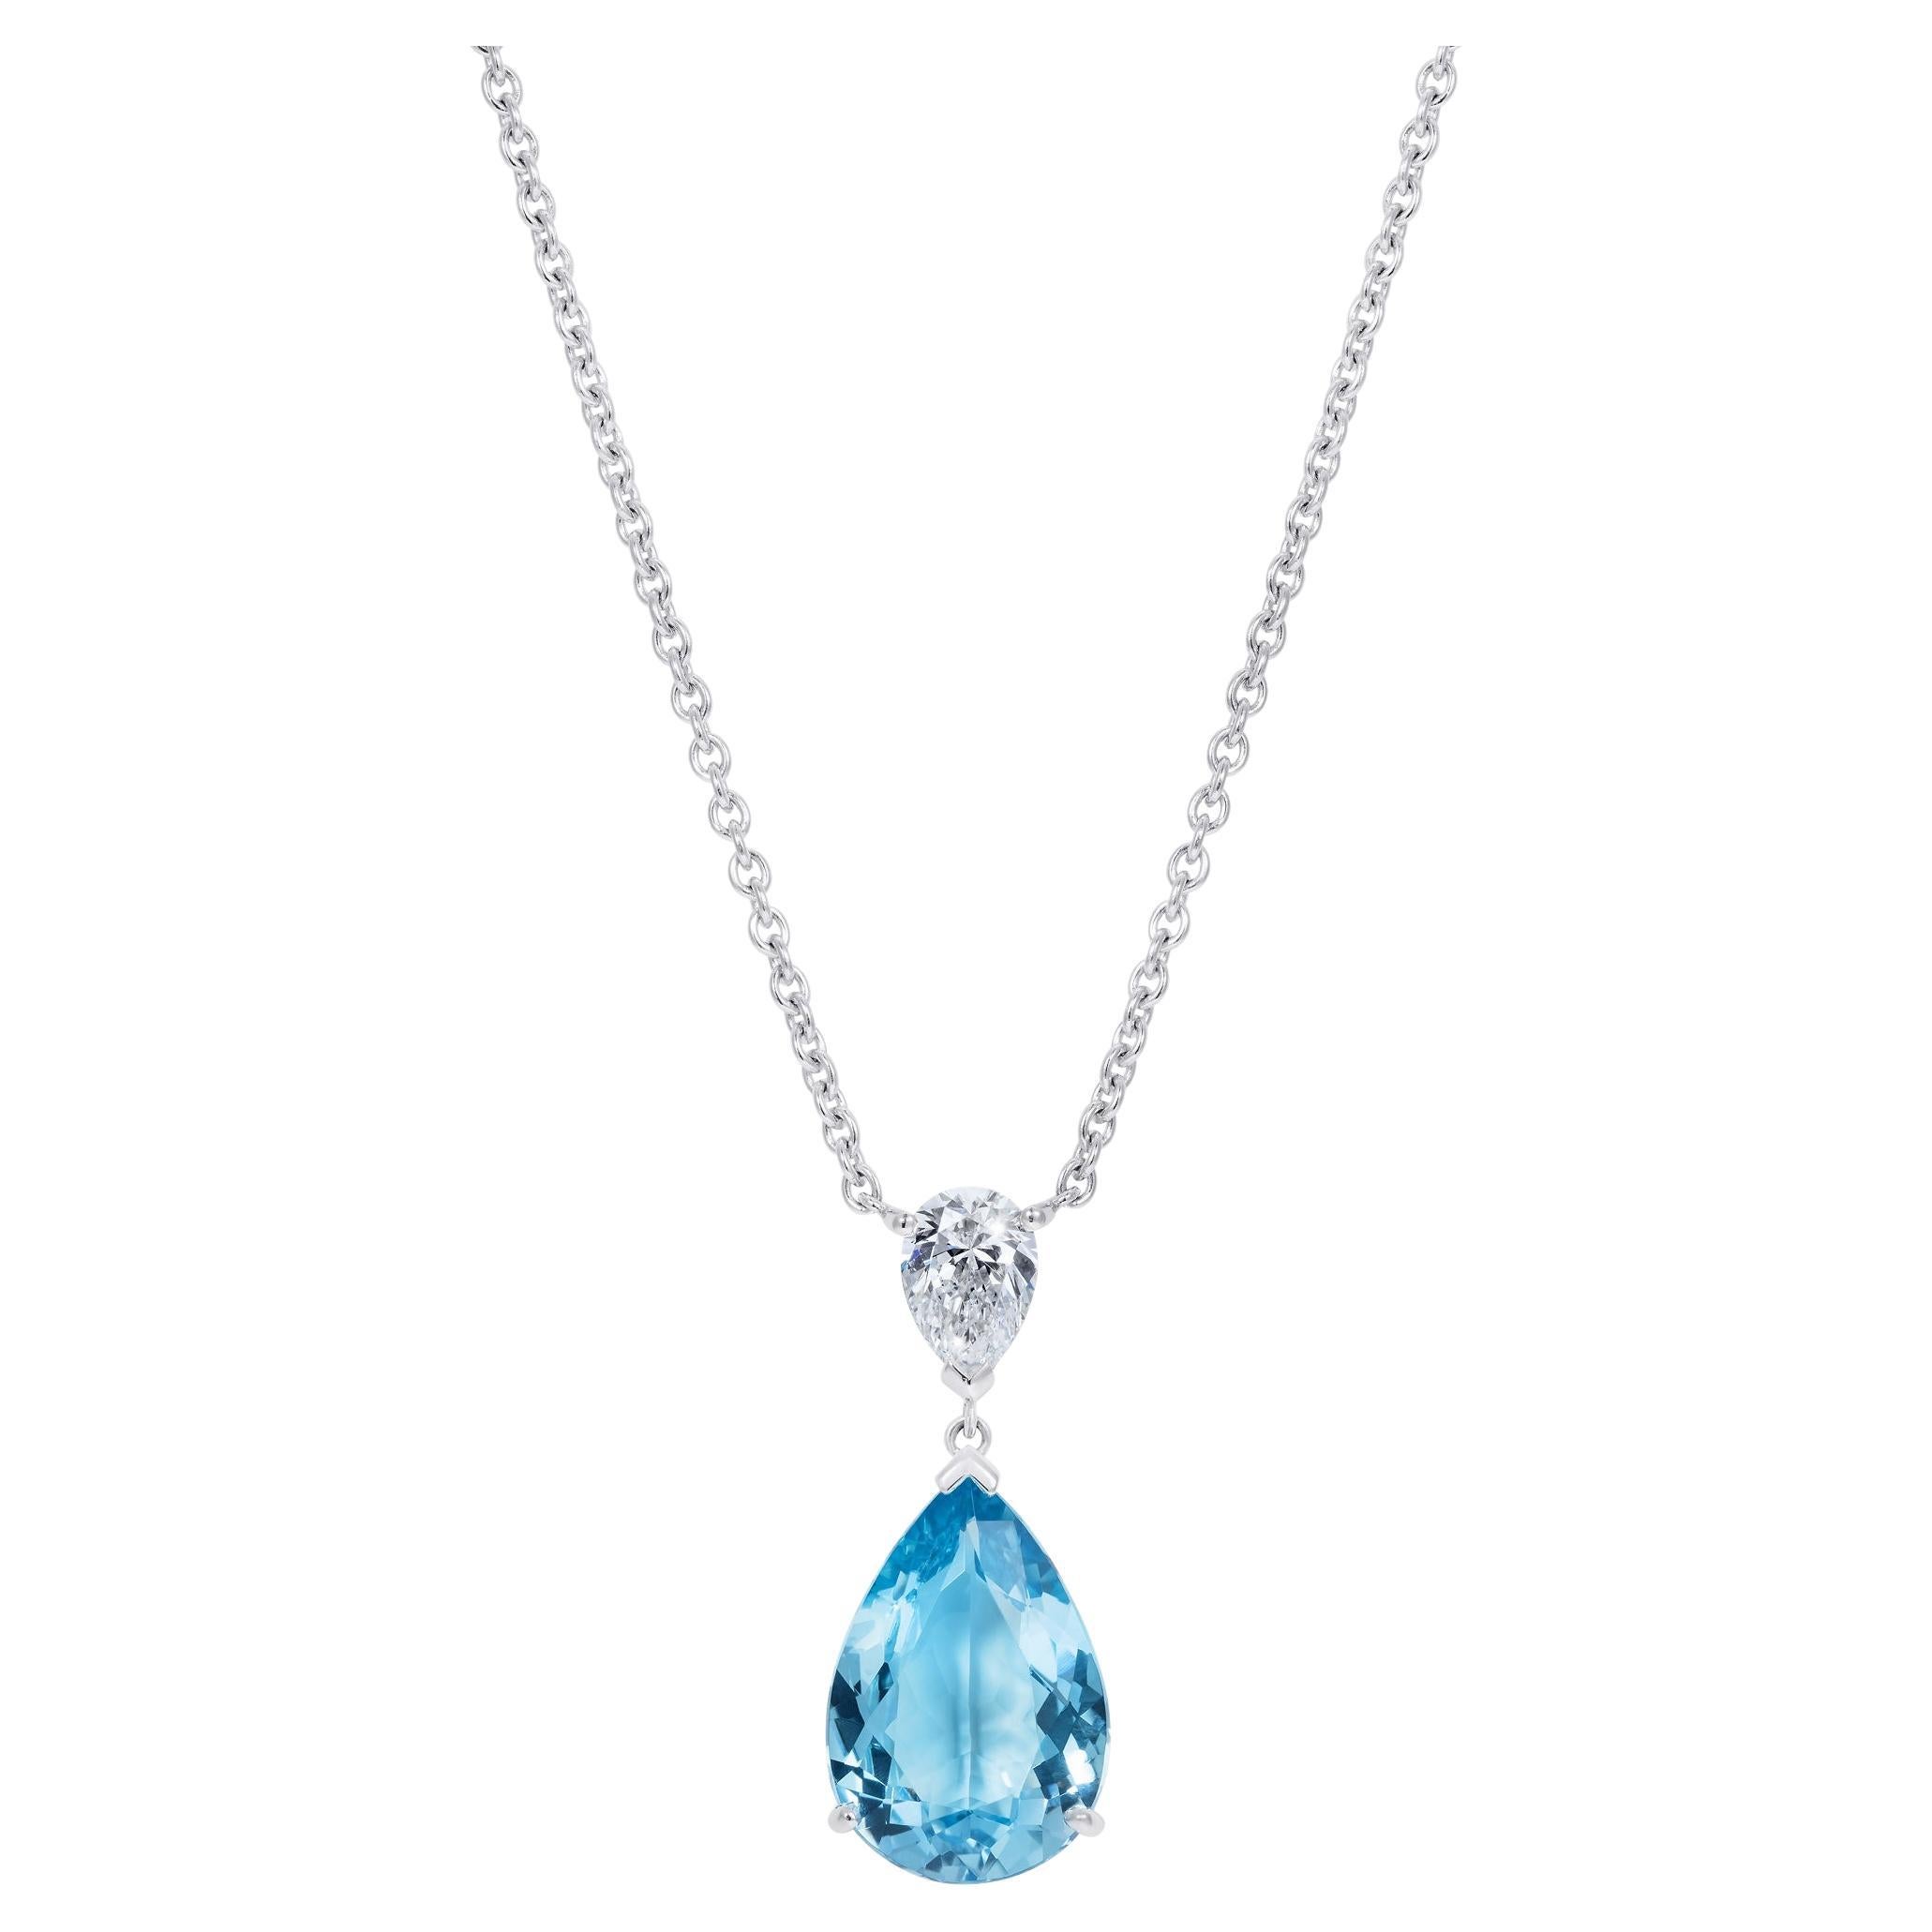 Hirsh Wallace Aquamarine and Diamond Pendant